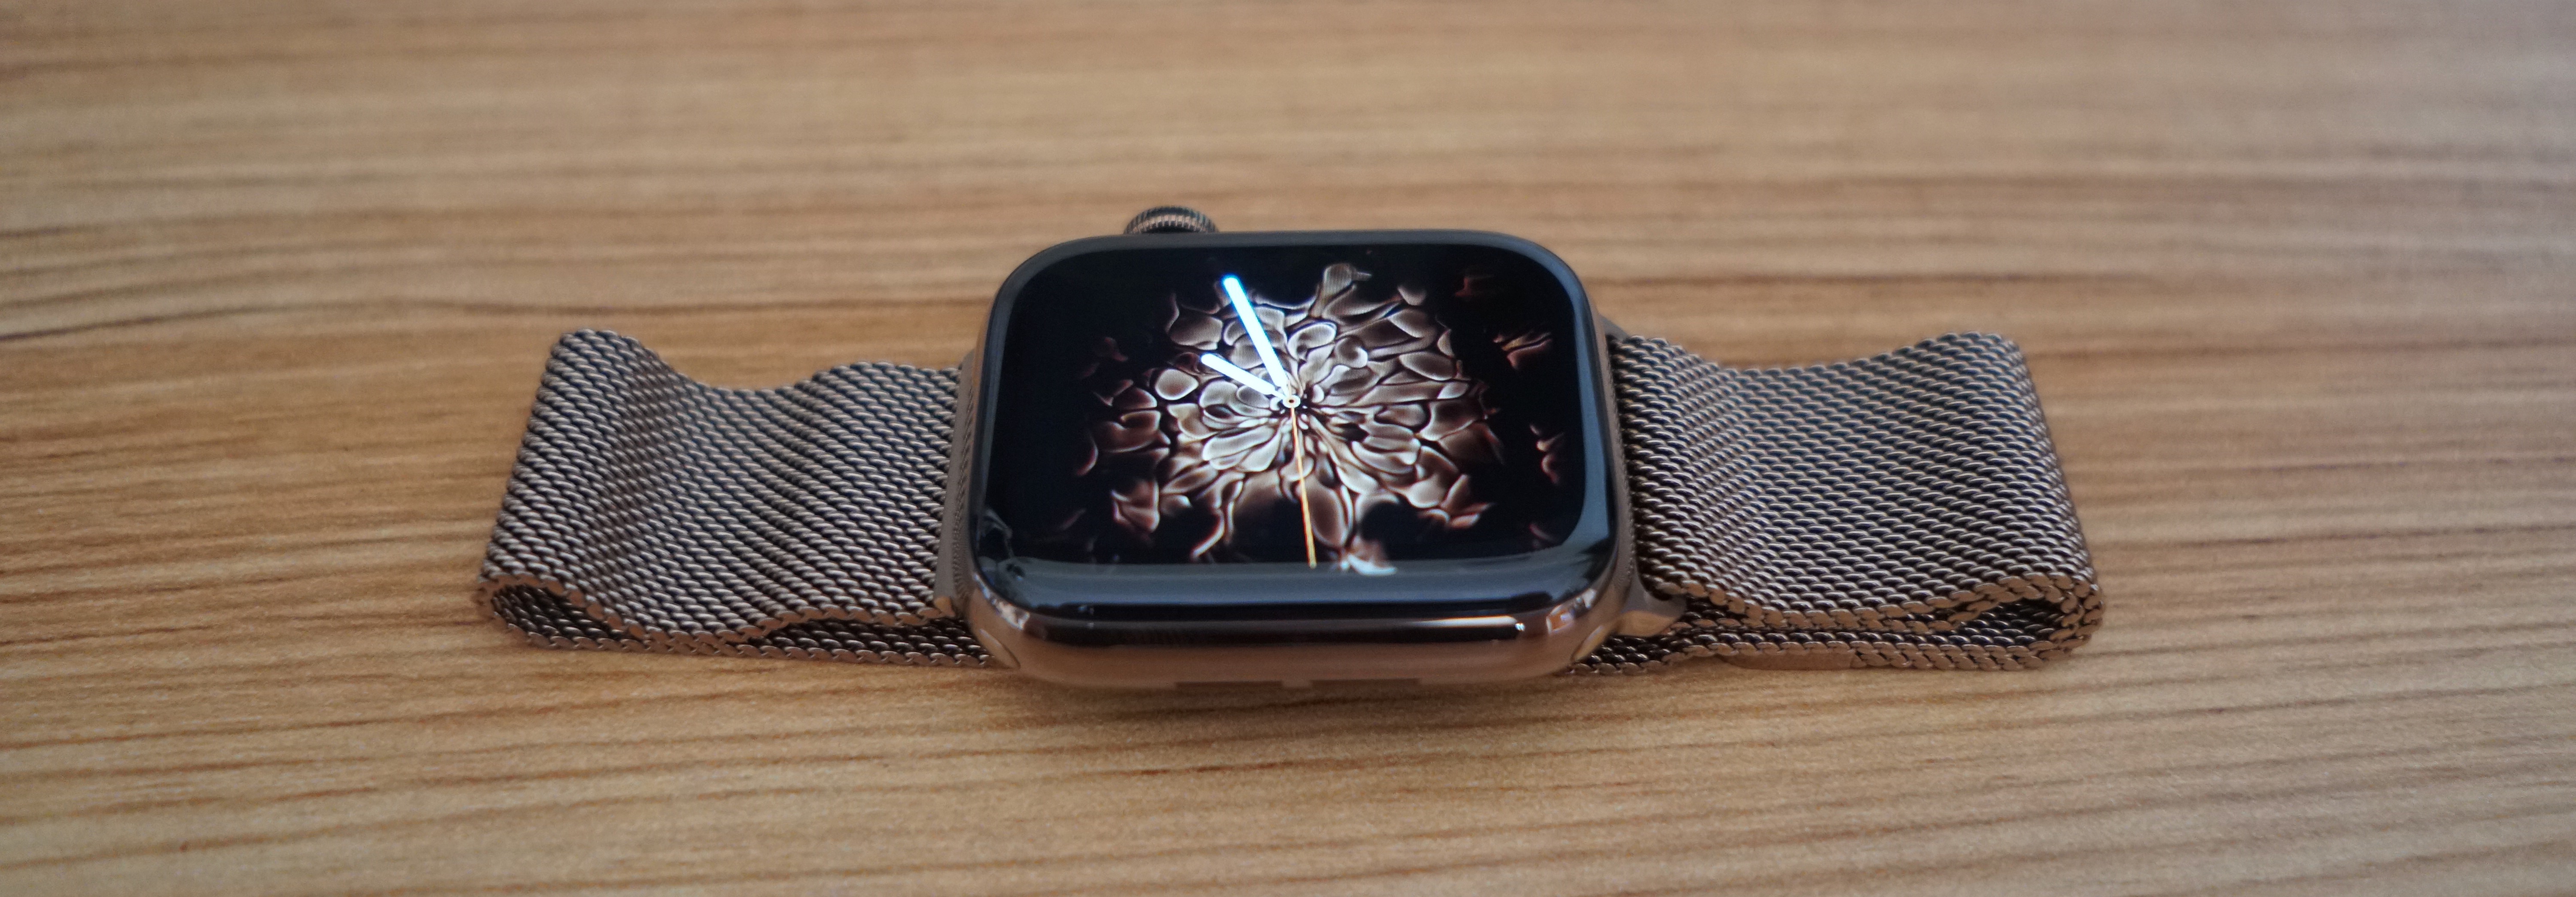 apple watch series 4 gold aluminum review